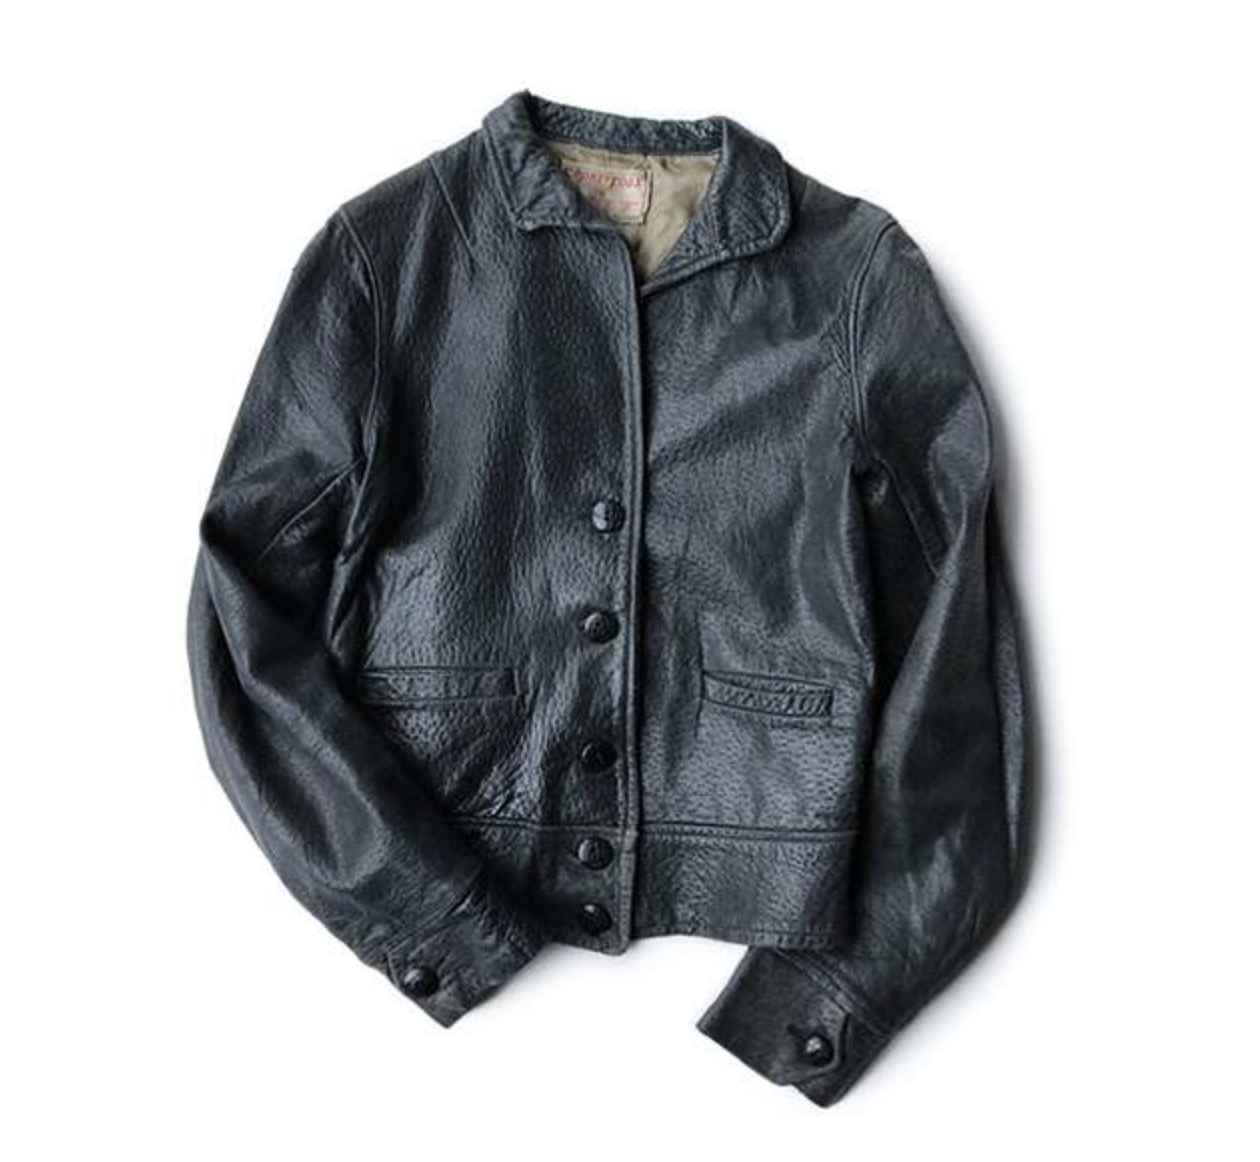 Levi's Vintage Clothing Lvc leather jacket - Gem